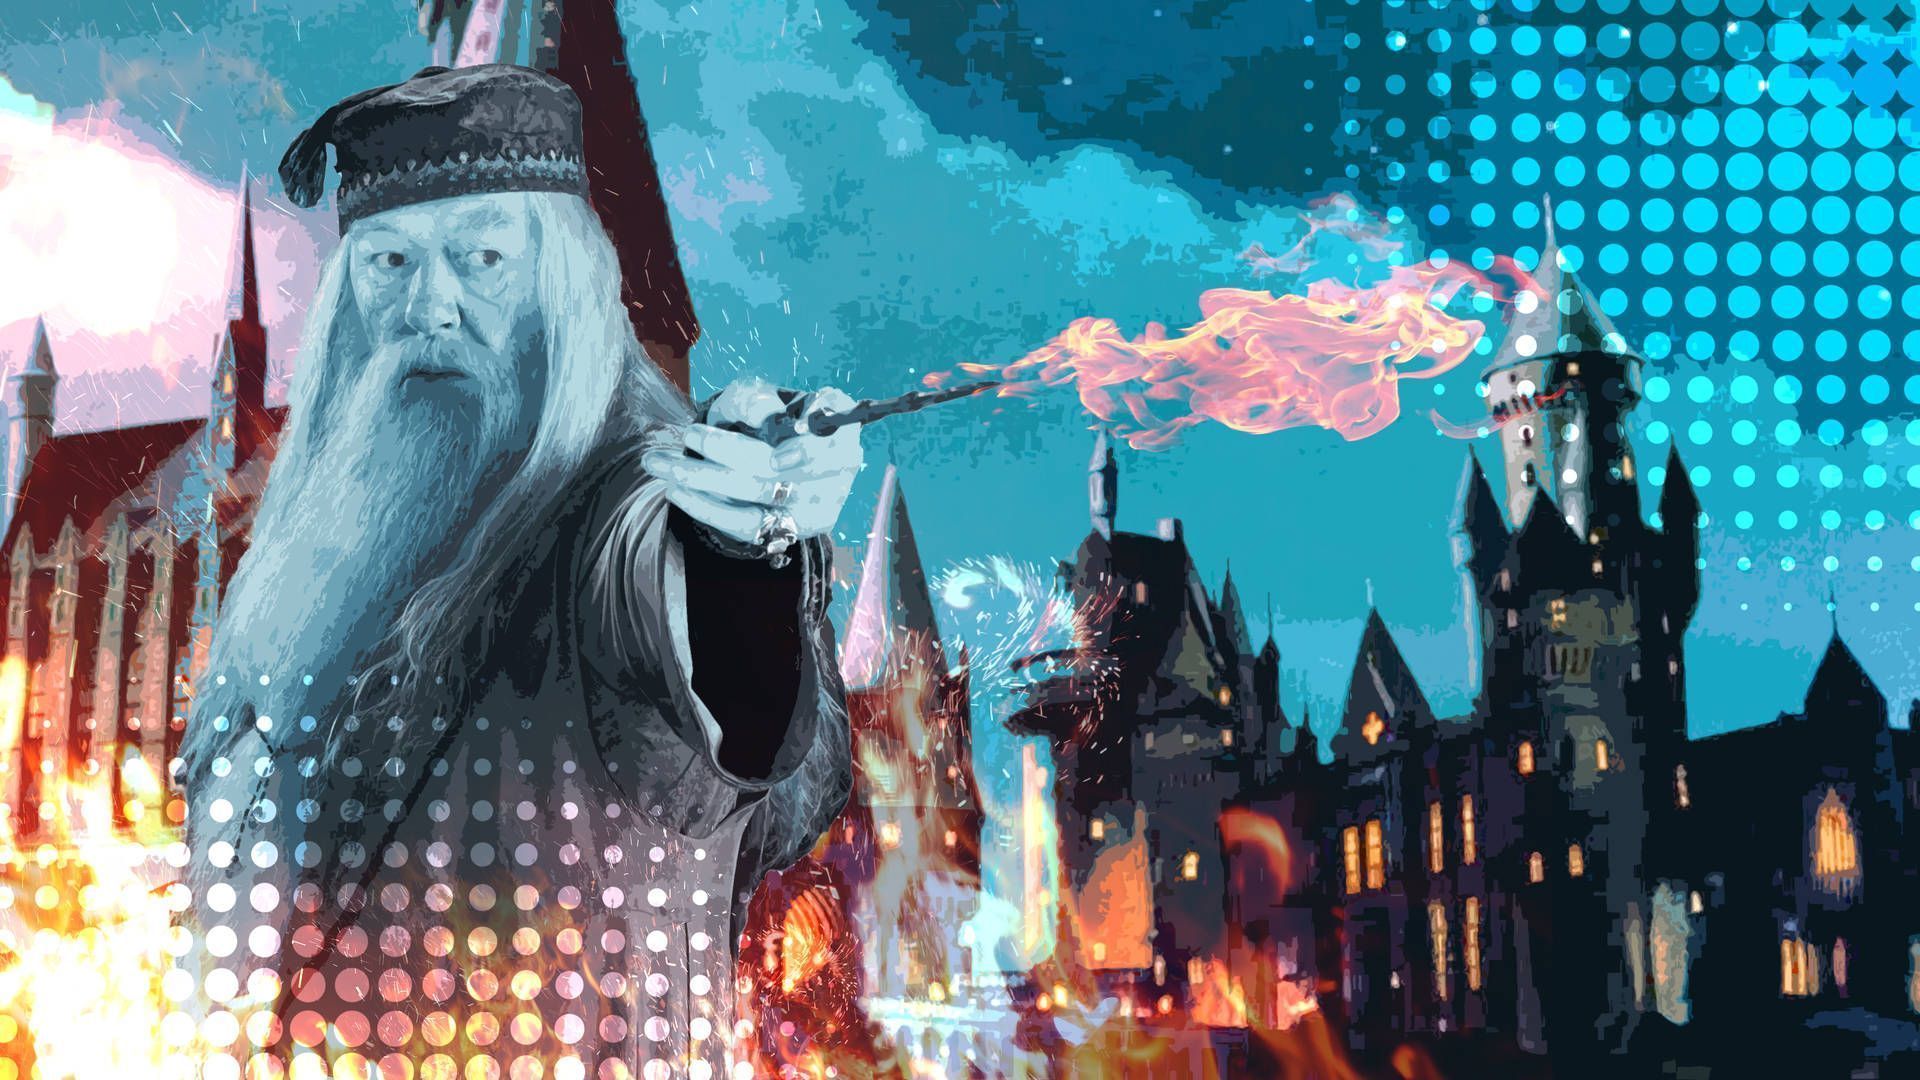 Hogwarts Aesthetic Wallpaper Full HD, 4K Free to Use